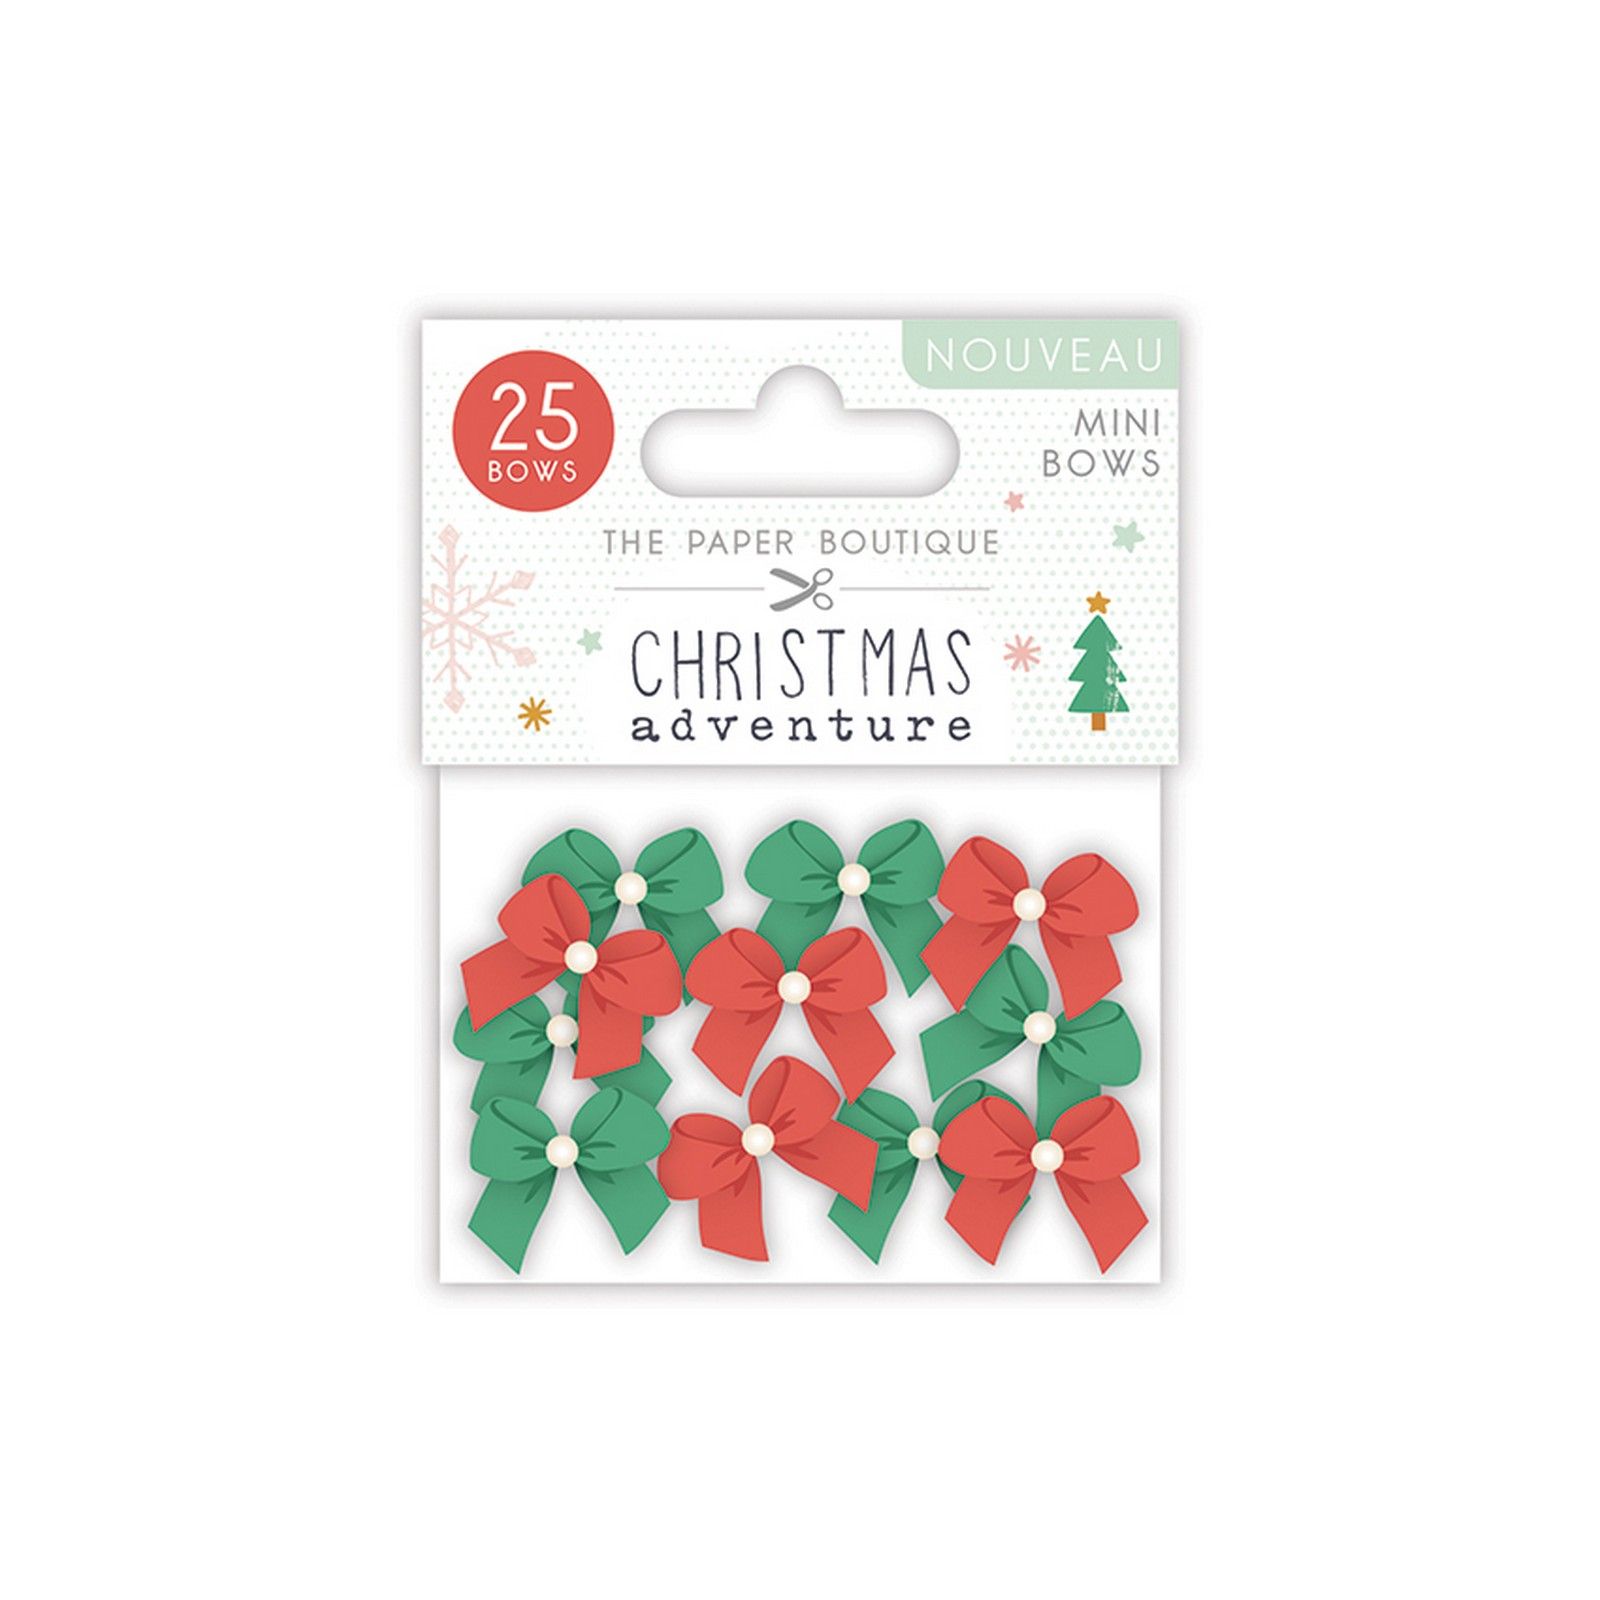 The Paper Boutique • Christmas adventure Mini bows